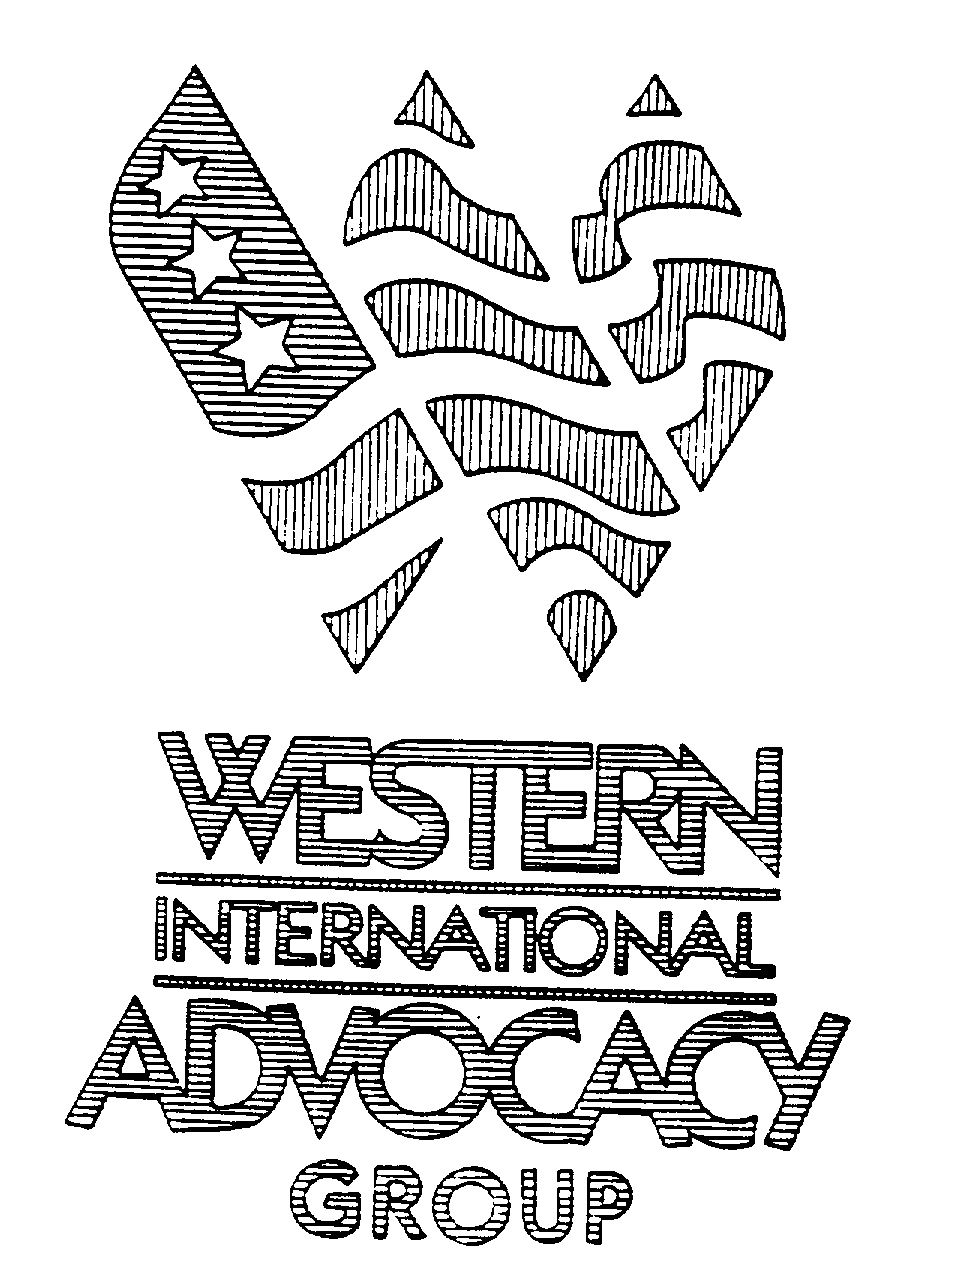  WESTERN INTERNATIONAL ADVOCACY GROUP